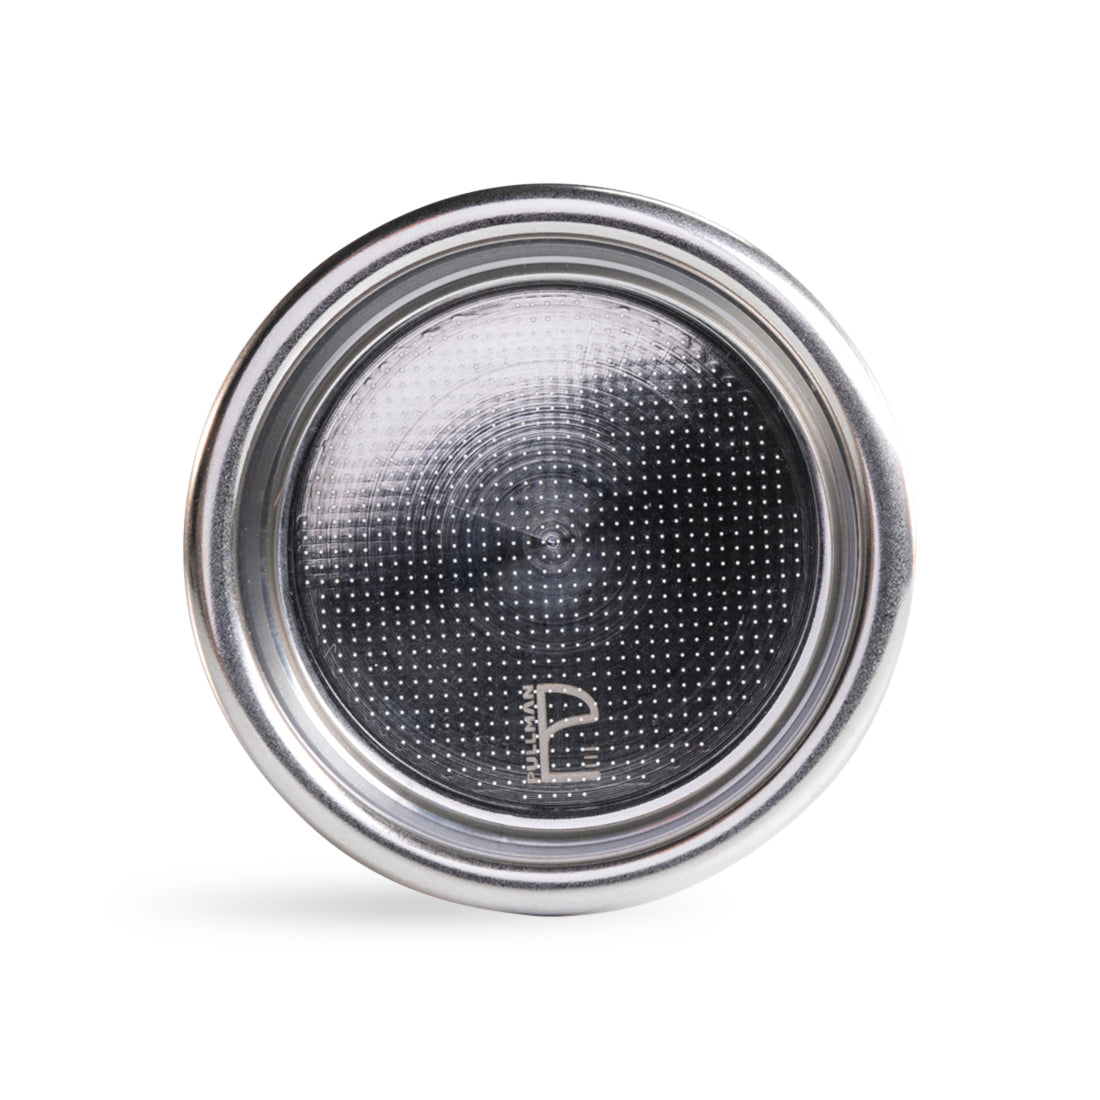 Pullman Filtration876 Basket I 17-19g commercial Pullman Espresso Accessories 